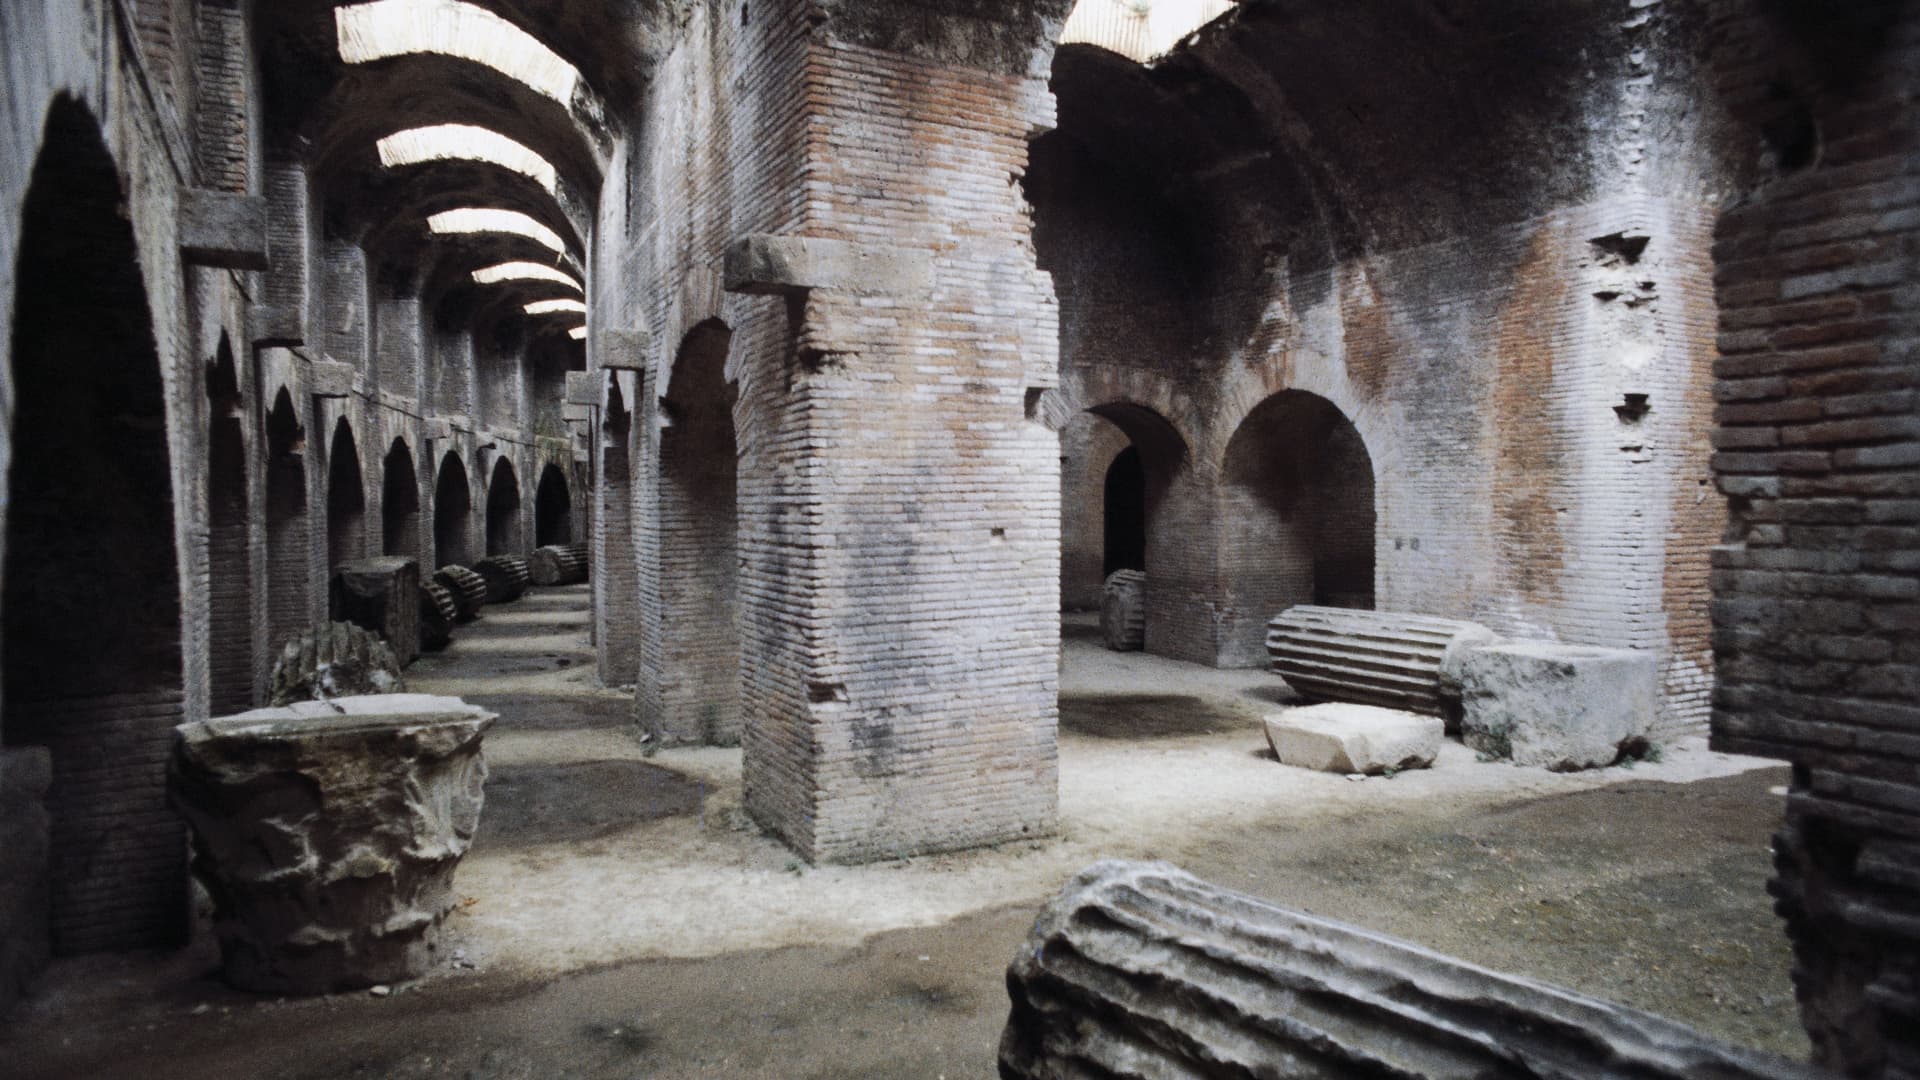 The underground passageways of the Flavian Amphitheatre in Pozzuoli, Italy.